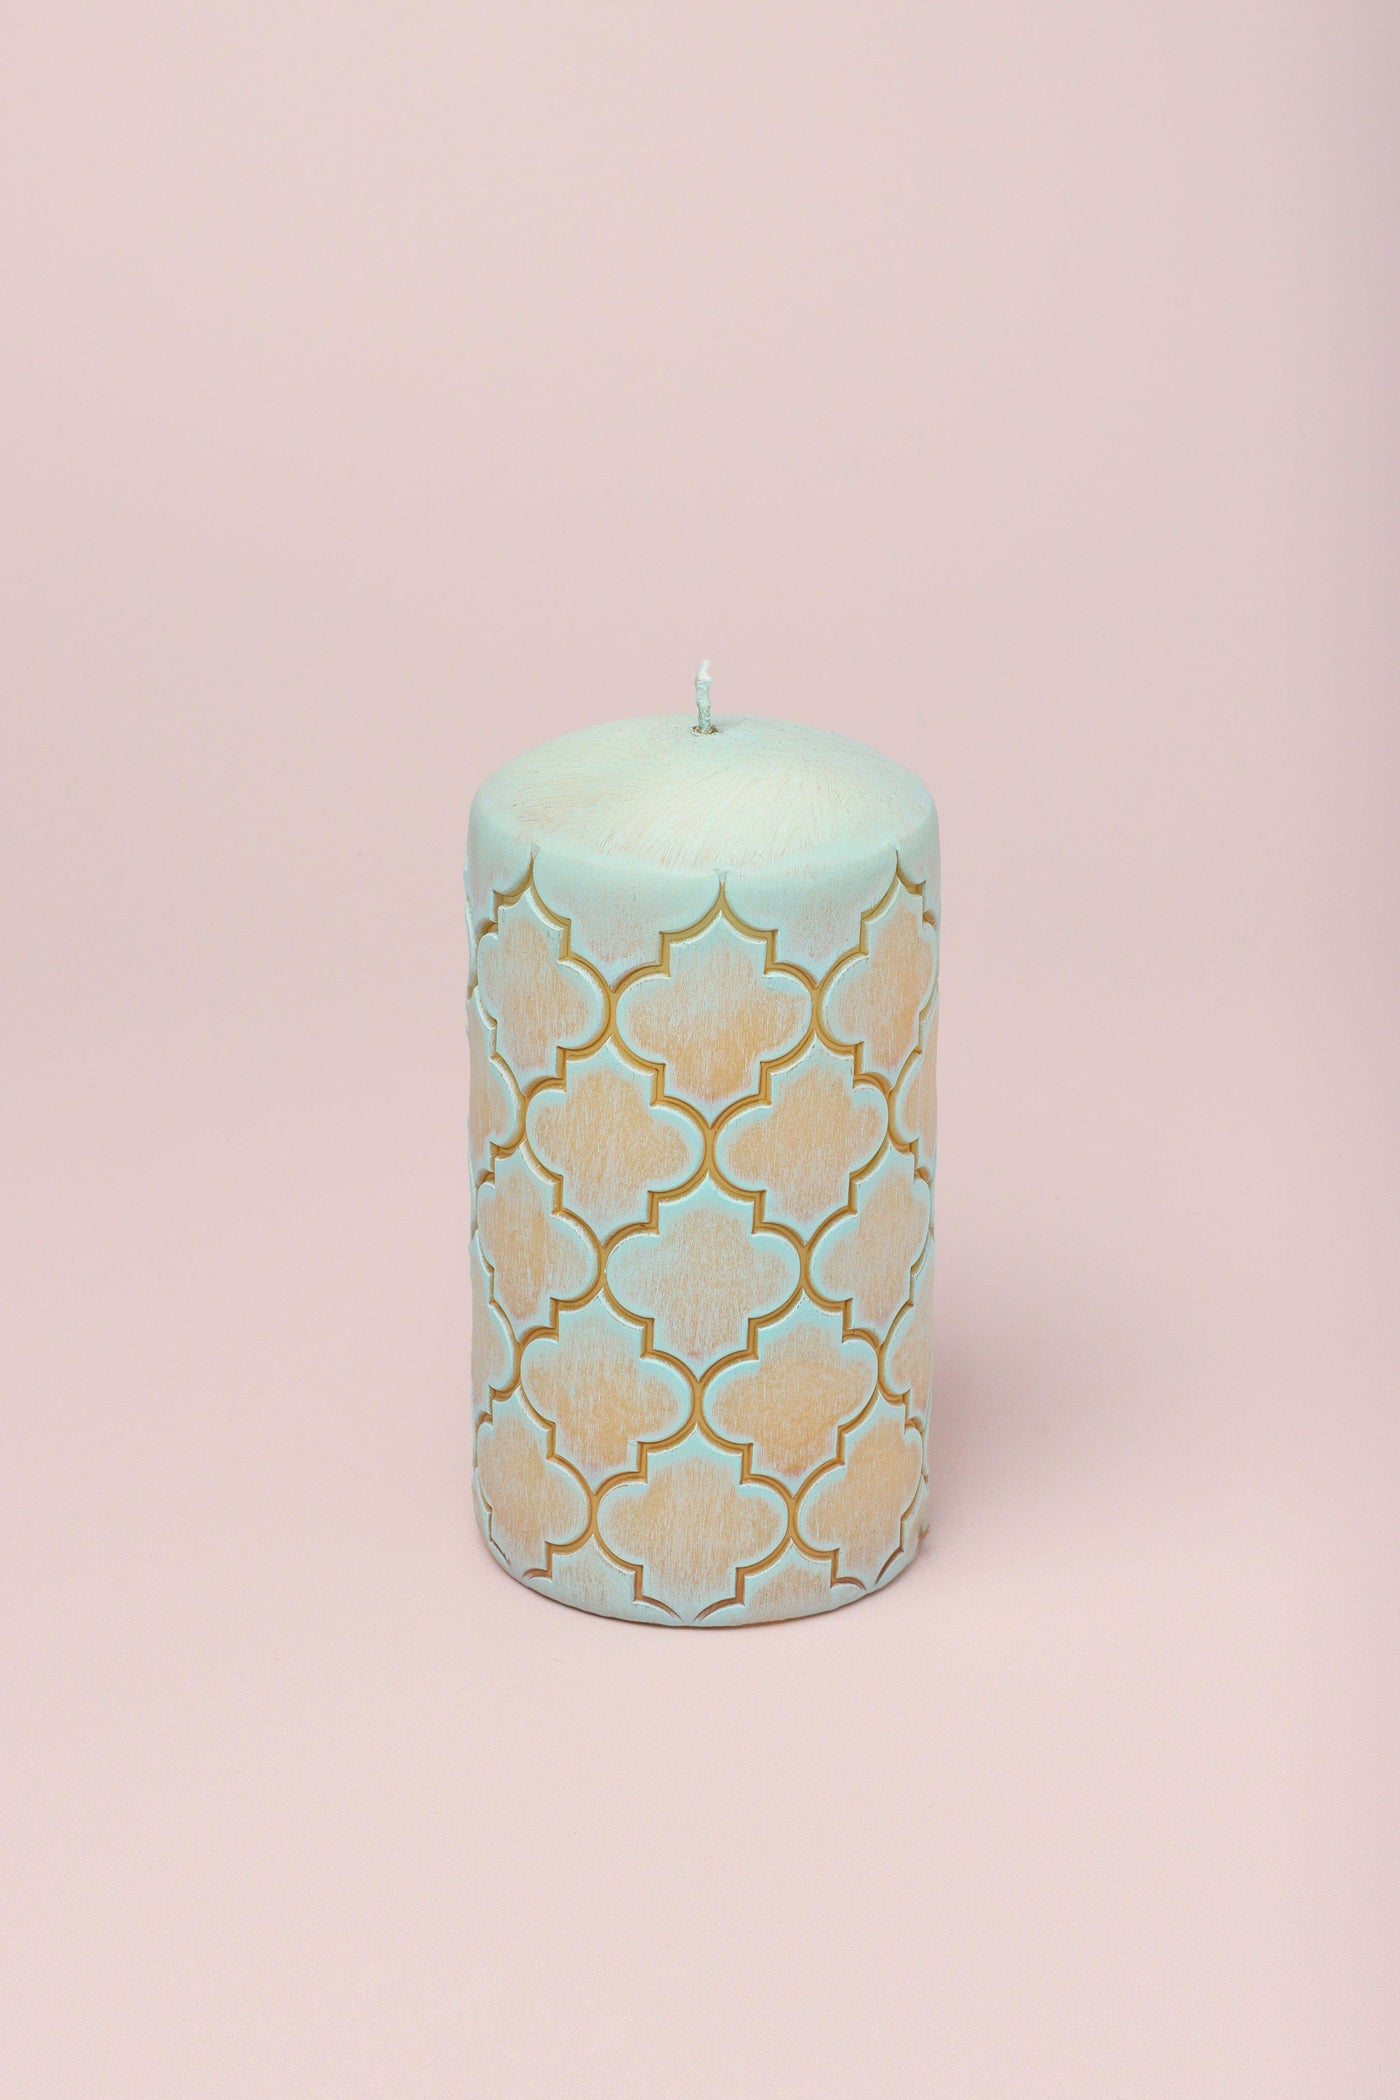 G Decor Candles Green Morocco Light Brass Pastel Pink Mint Pillar Candle